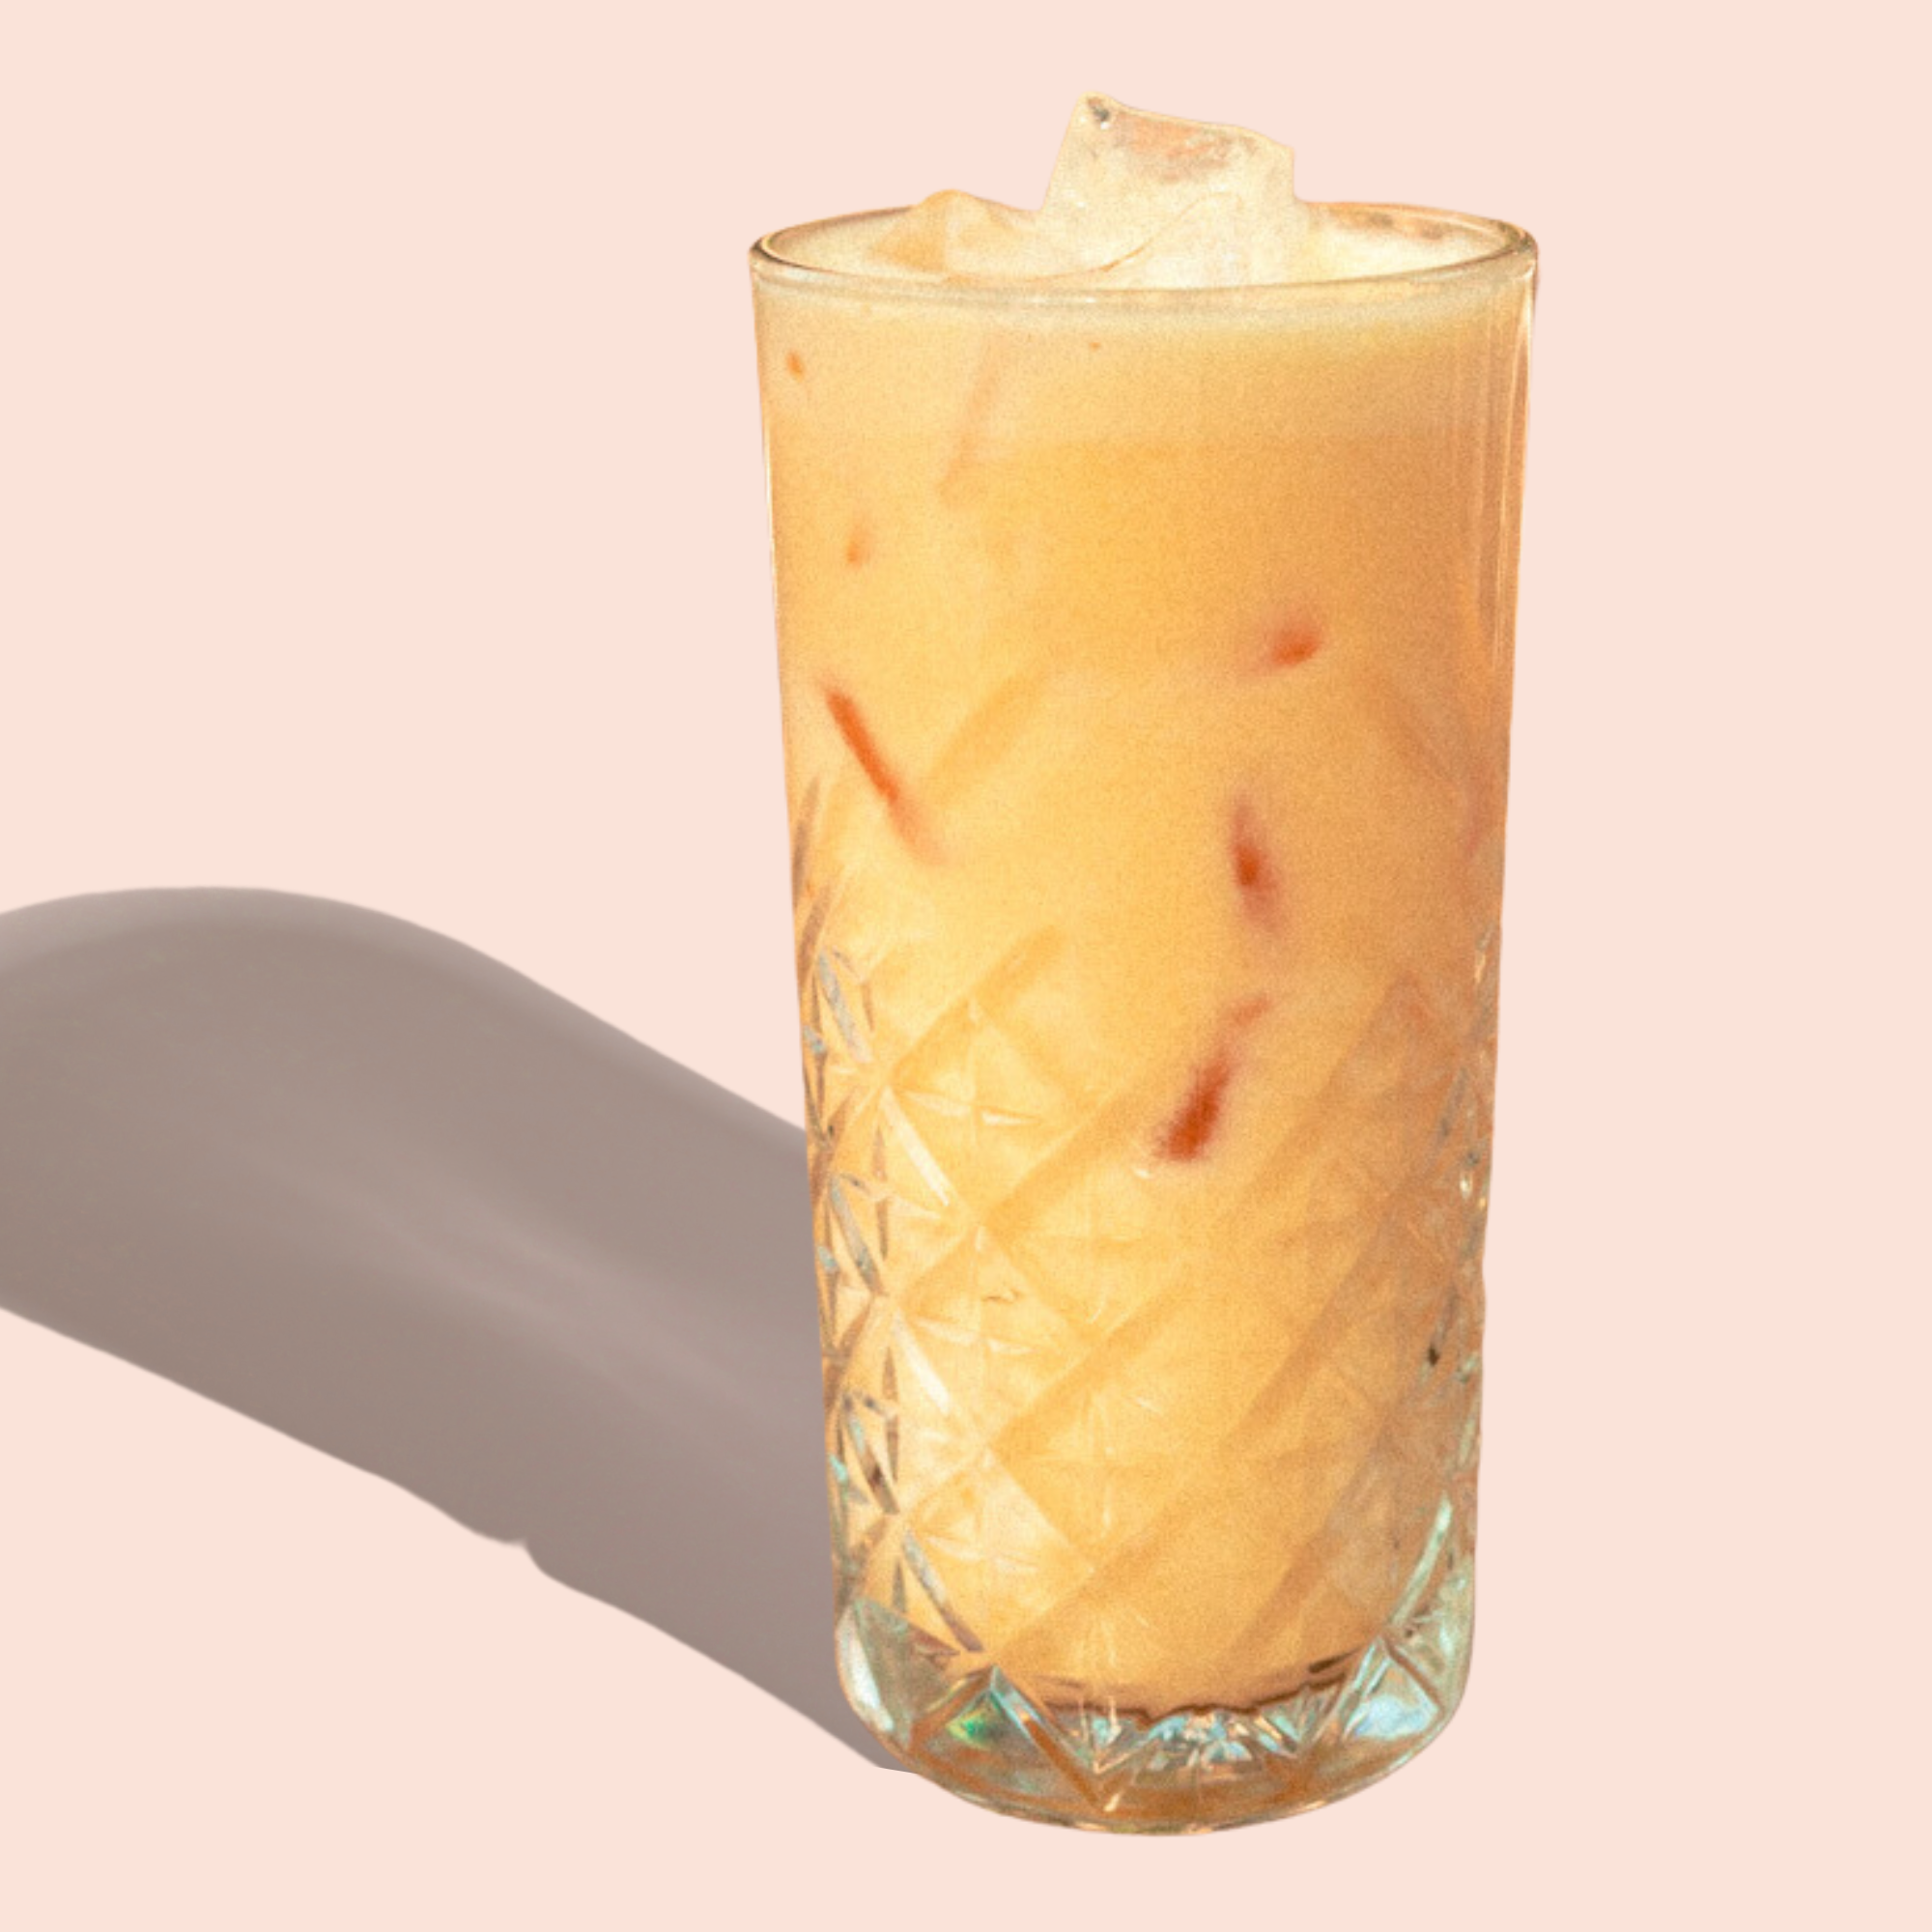 Peach Coconutmilk Refresher